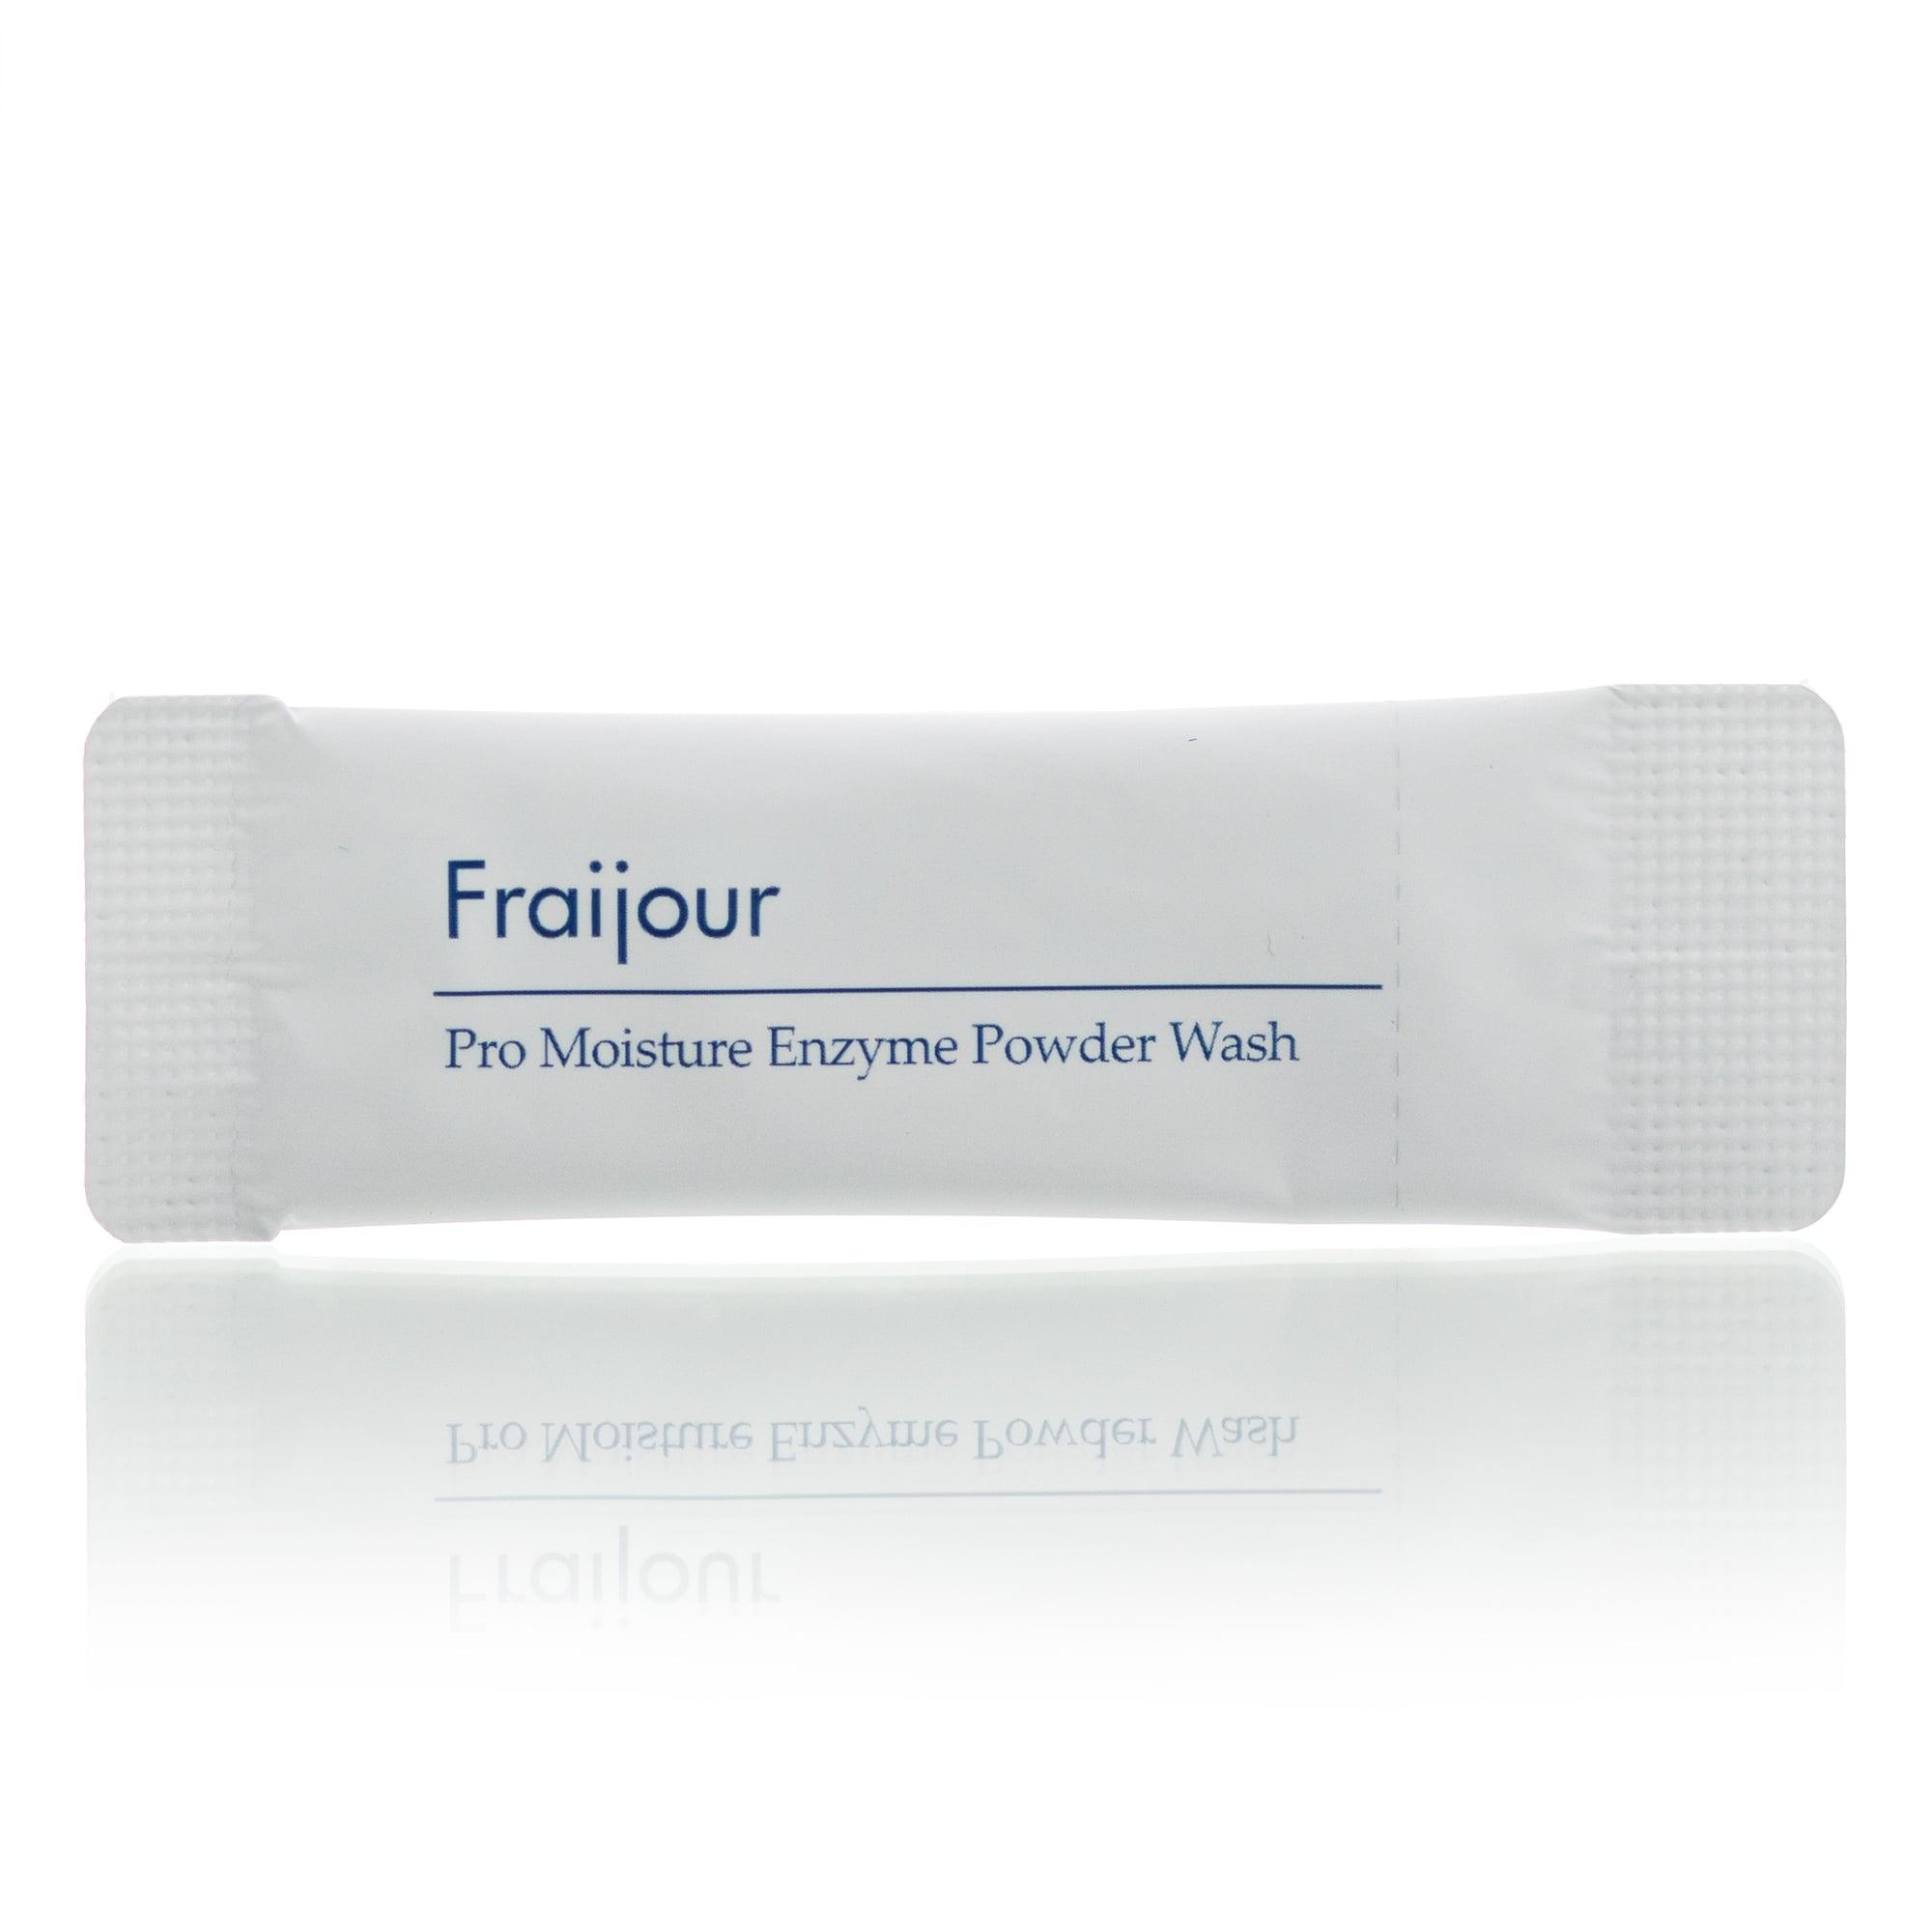 Очищаюча ензимна пудра Fraijour Pro Moisture Enzyme Powder Wash 1 шт. - фото 1